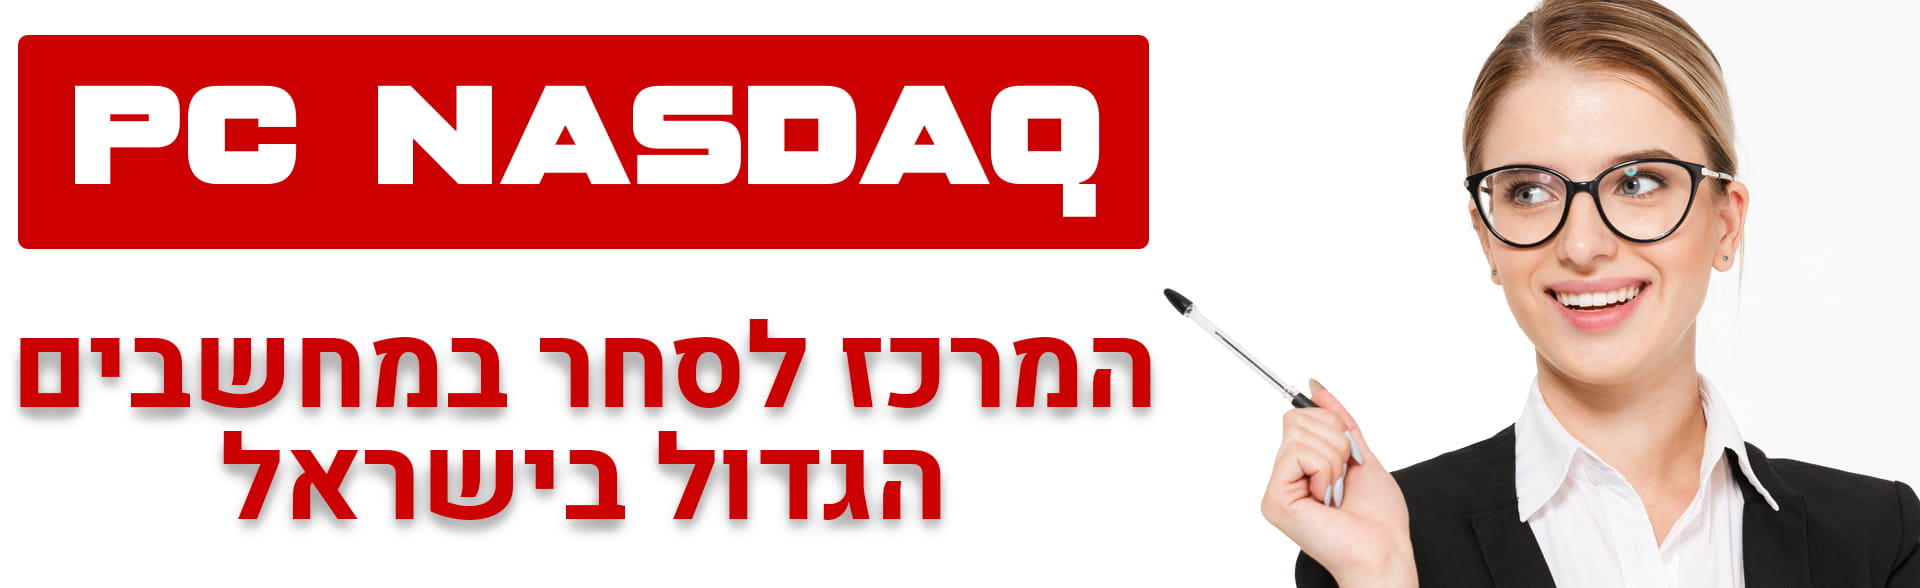 PC Nasdaq - המרכז לסחר במחשבים הגדול בישראל